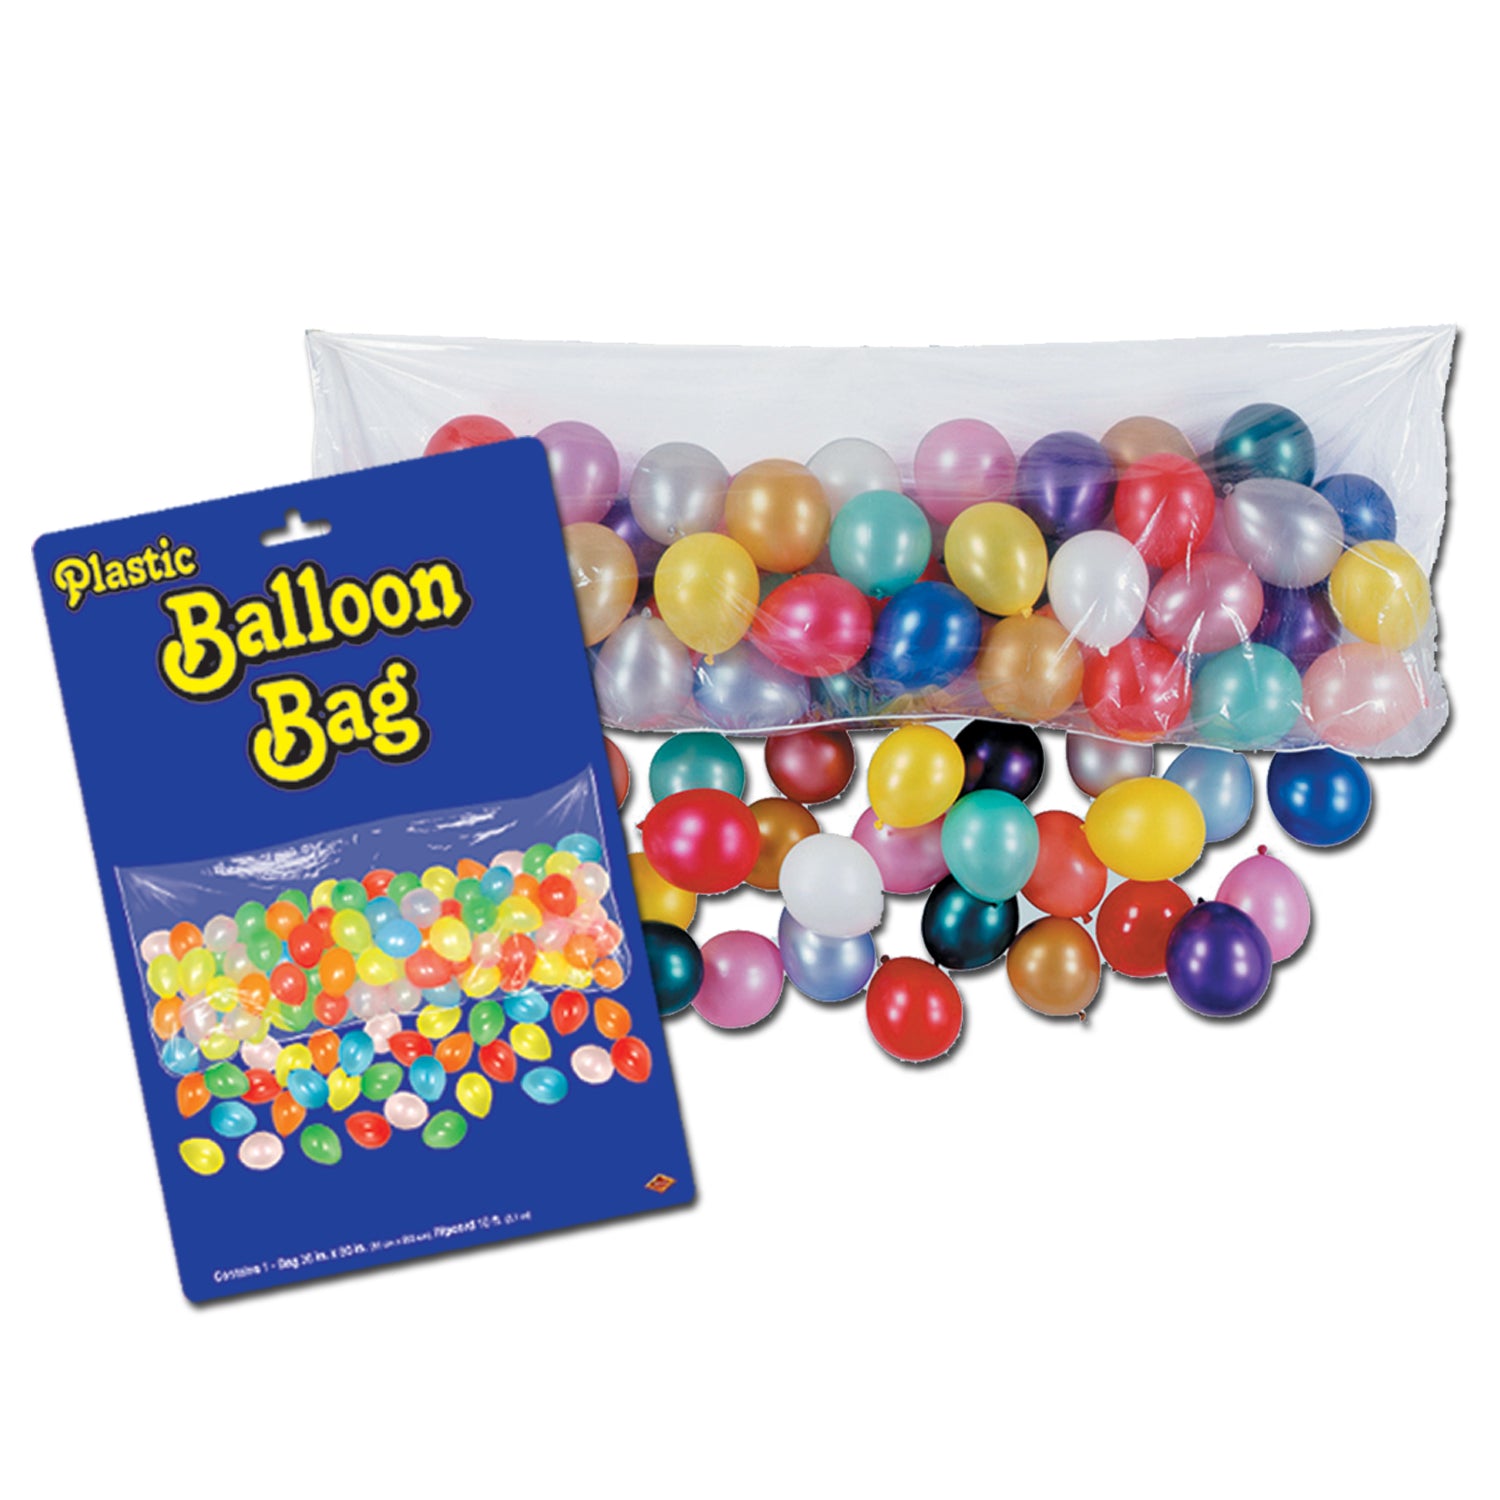 36" x 80" Balloon Drop Bag- Celebration Balloon Release